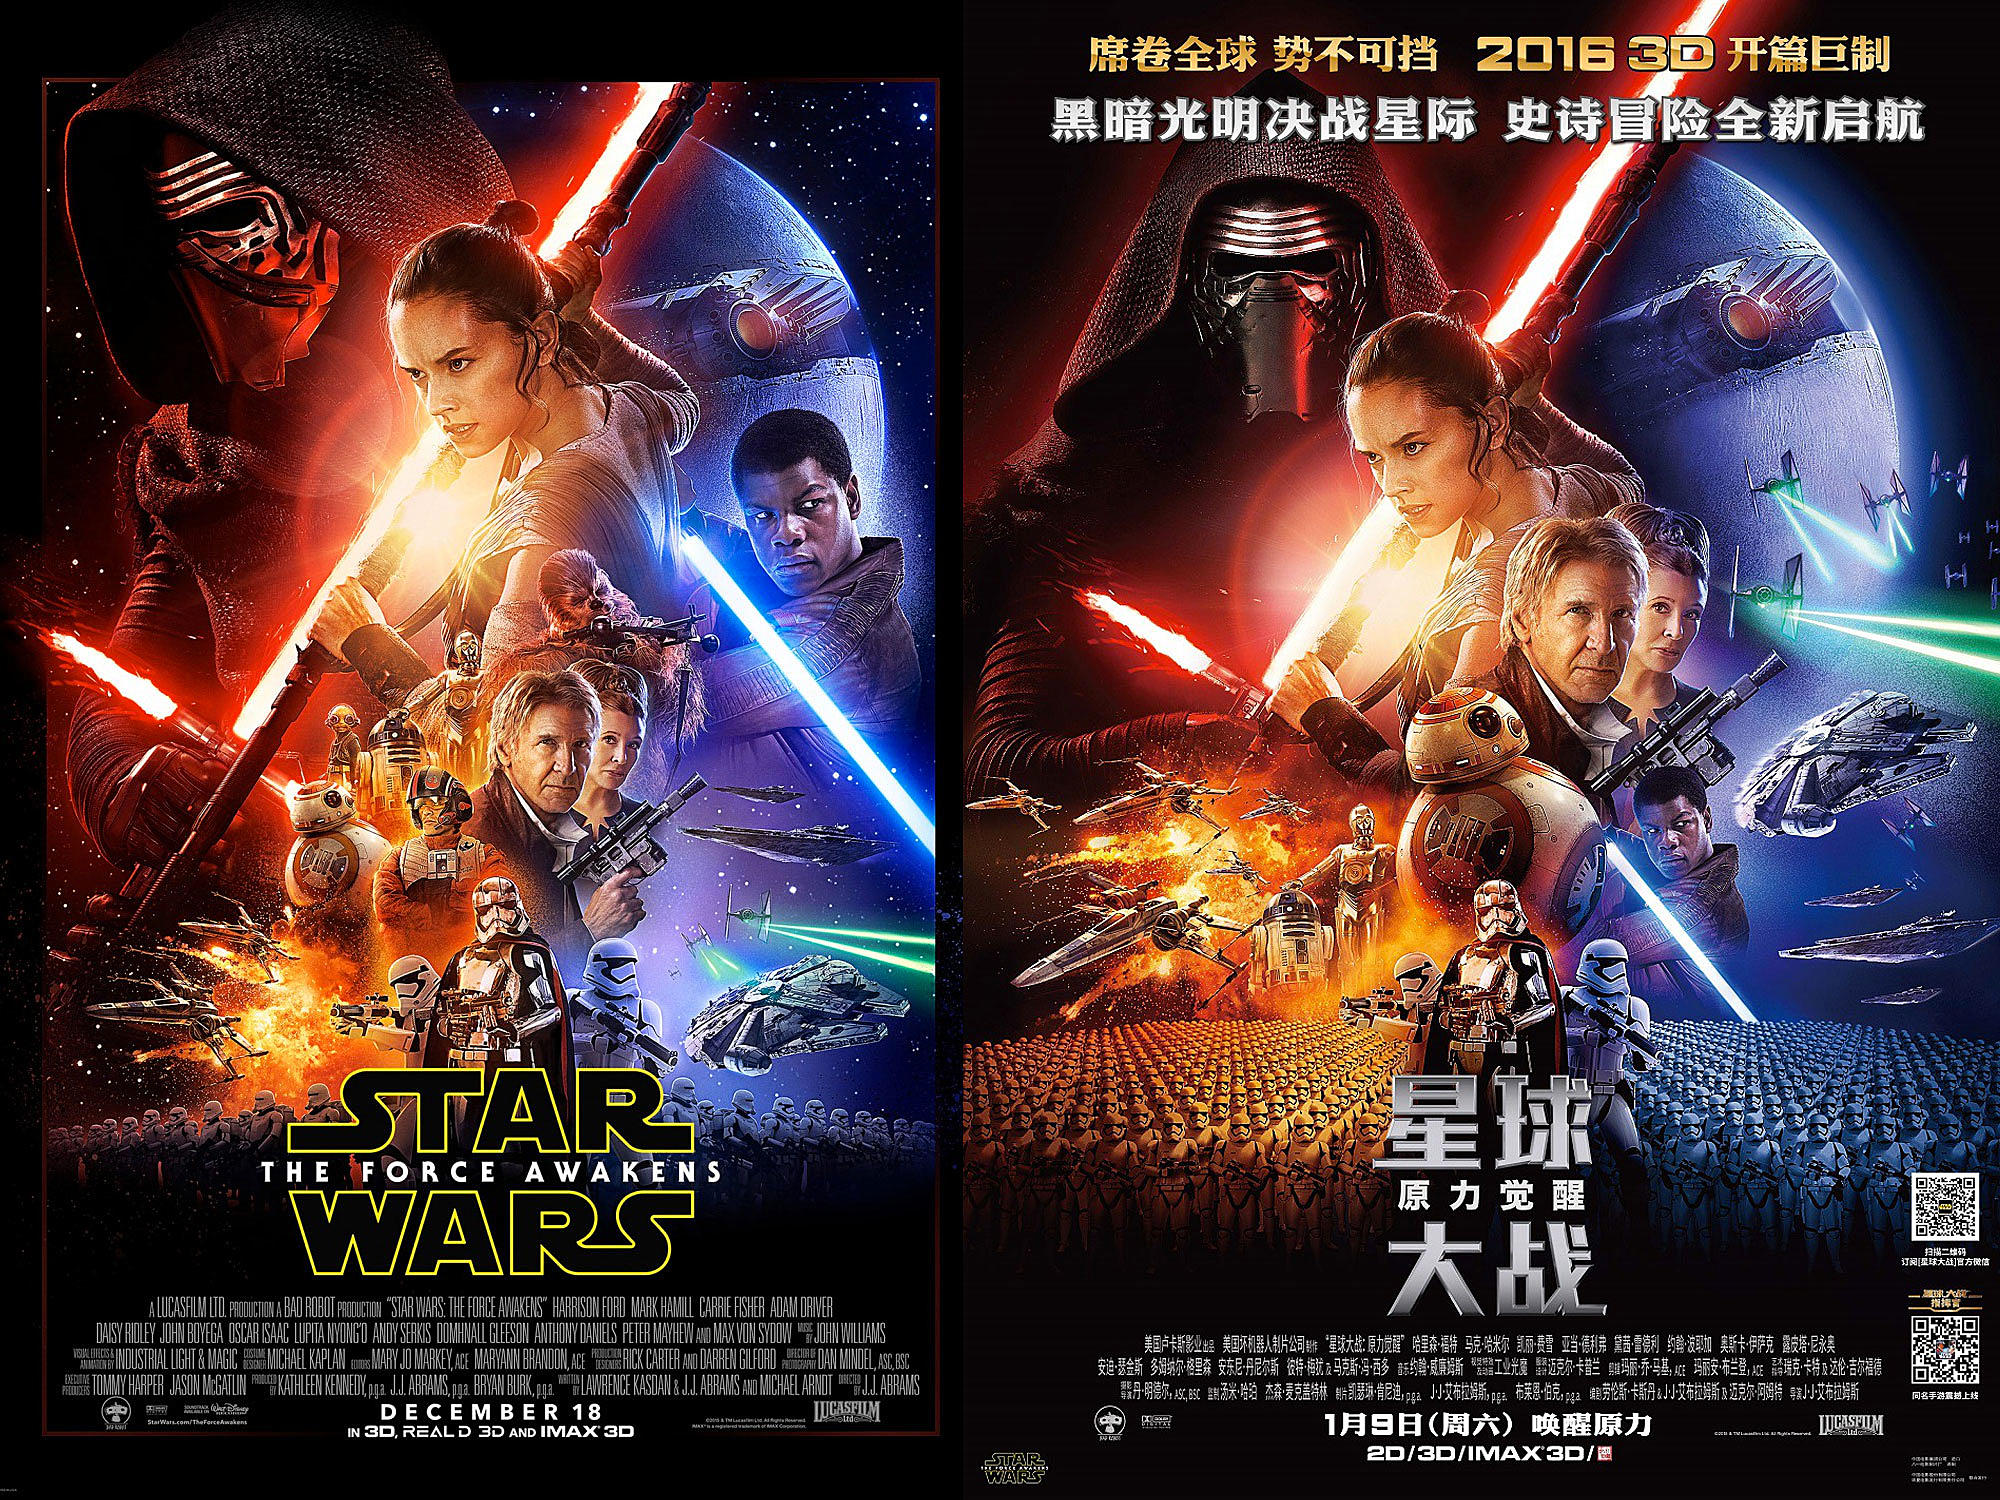 Star Wars' China Poster Shrinks Black Character